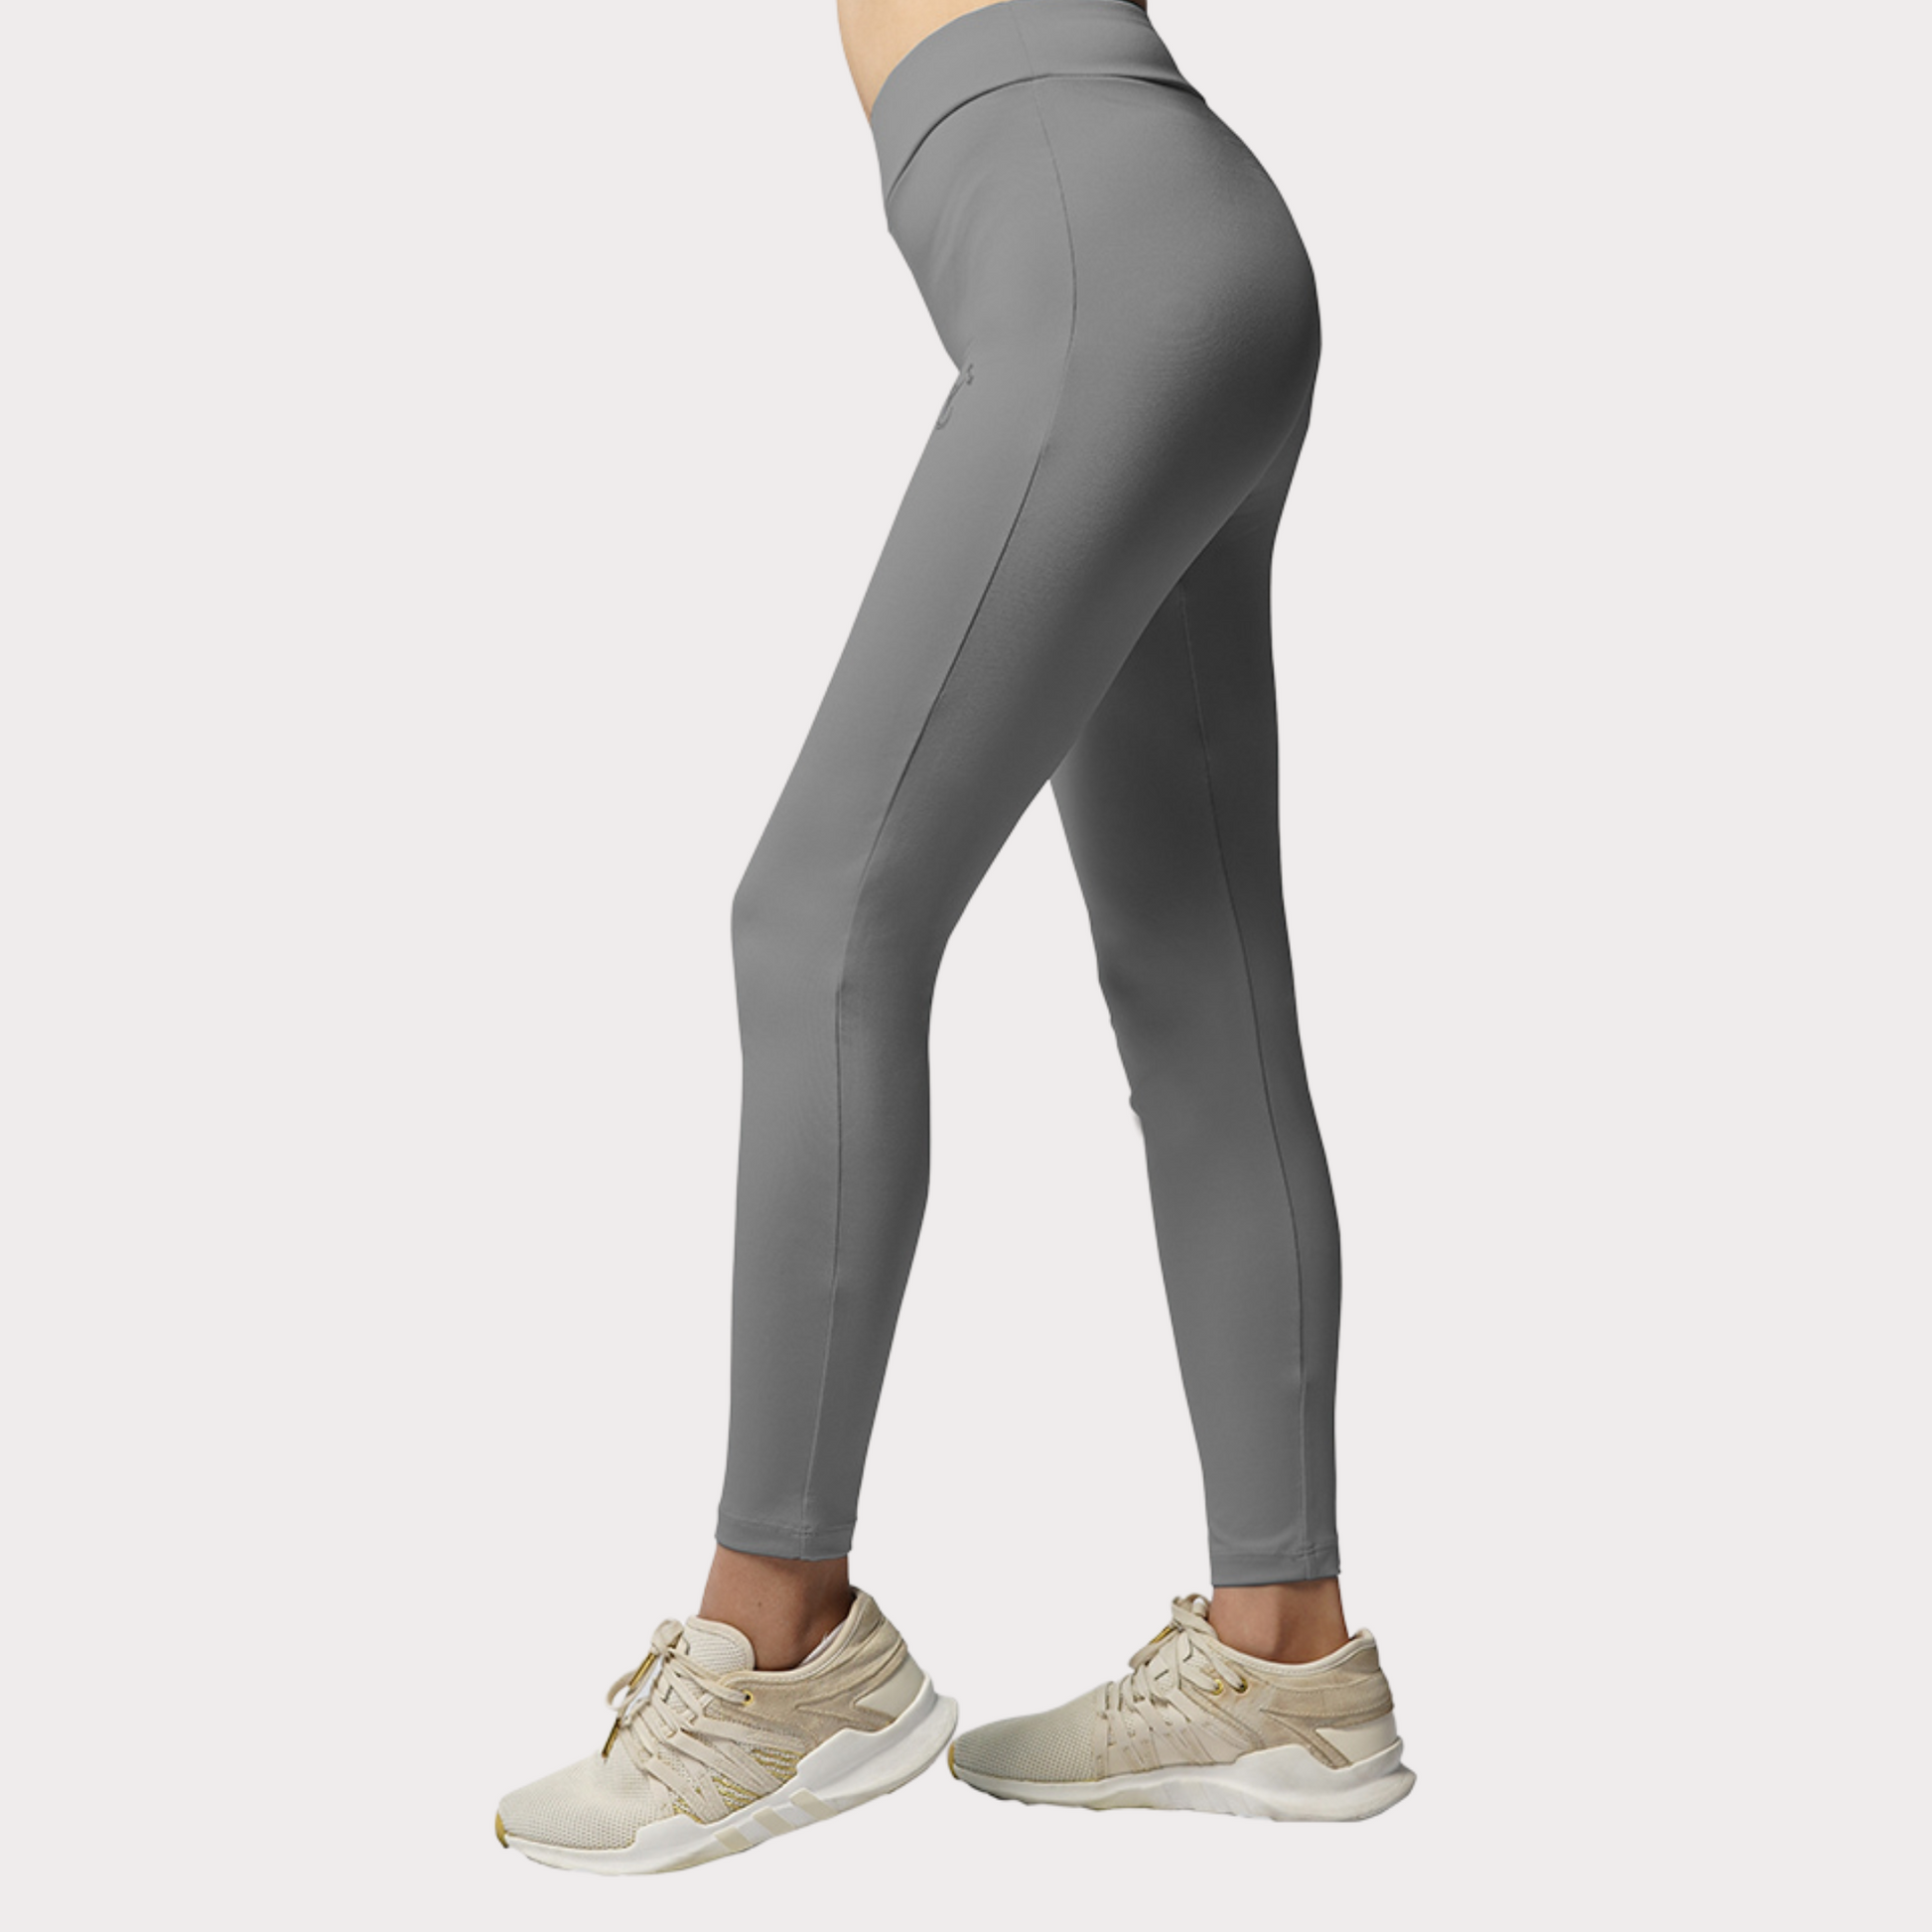 Capri & Leggings Activewear / Sportswear - Women's Essential Leggings - S / Ashton Grey - Outperformer